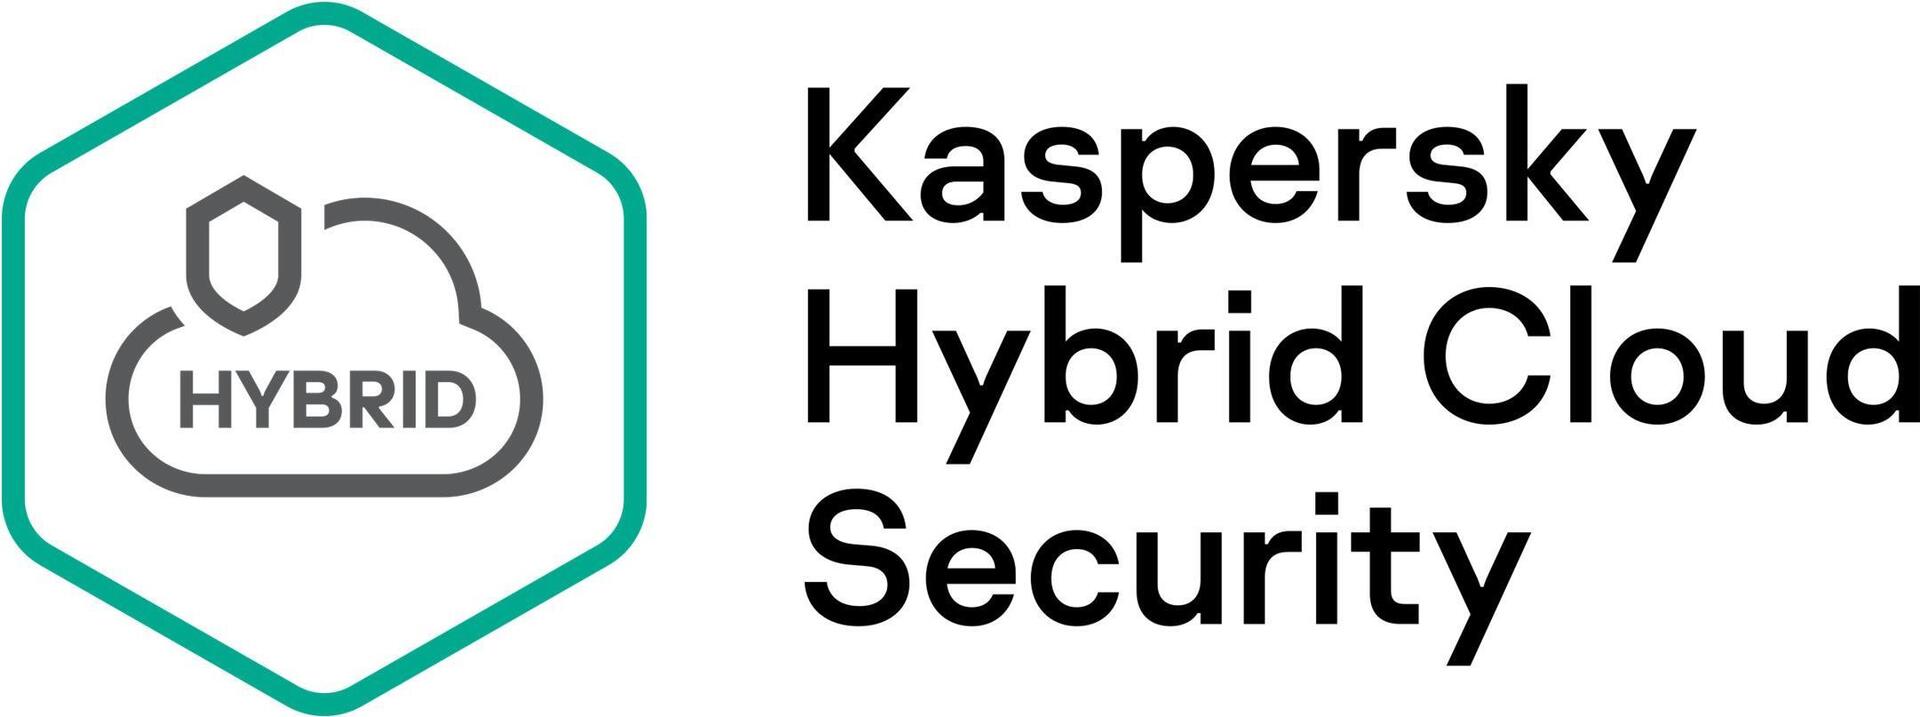 Kaspersky Hybrid Cloud Security Desktop (KL4155XASDR)